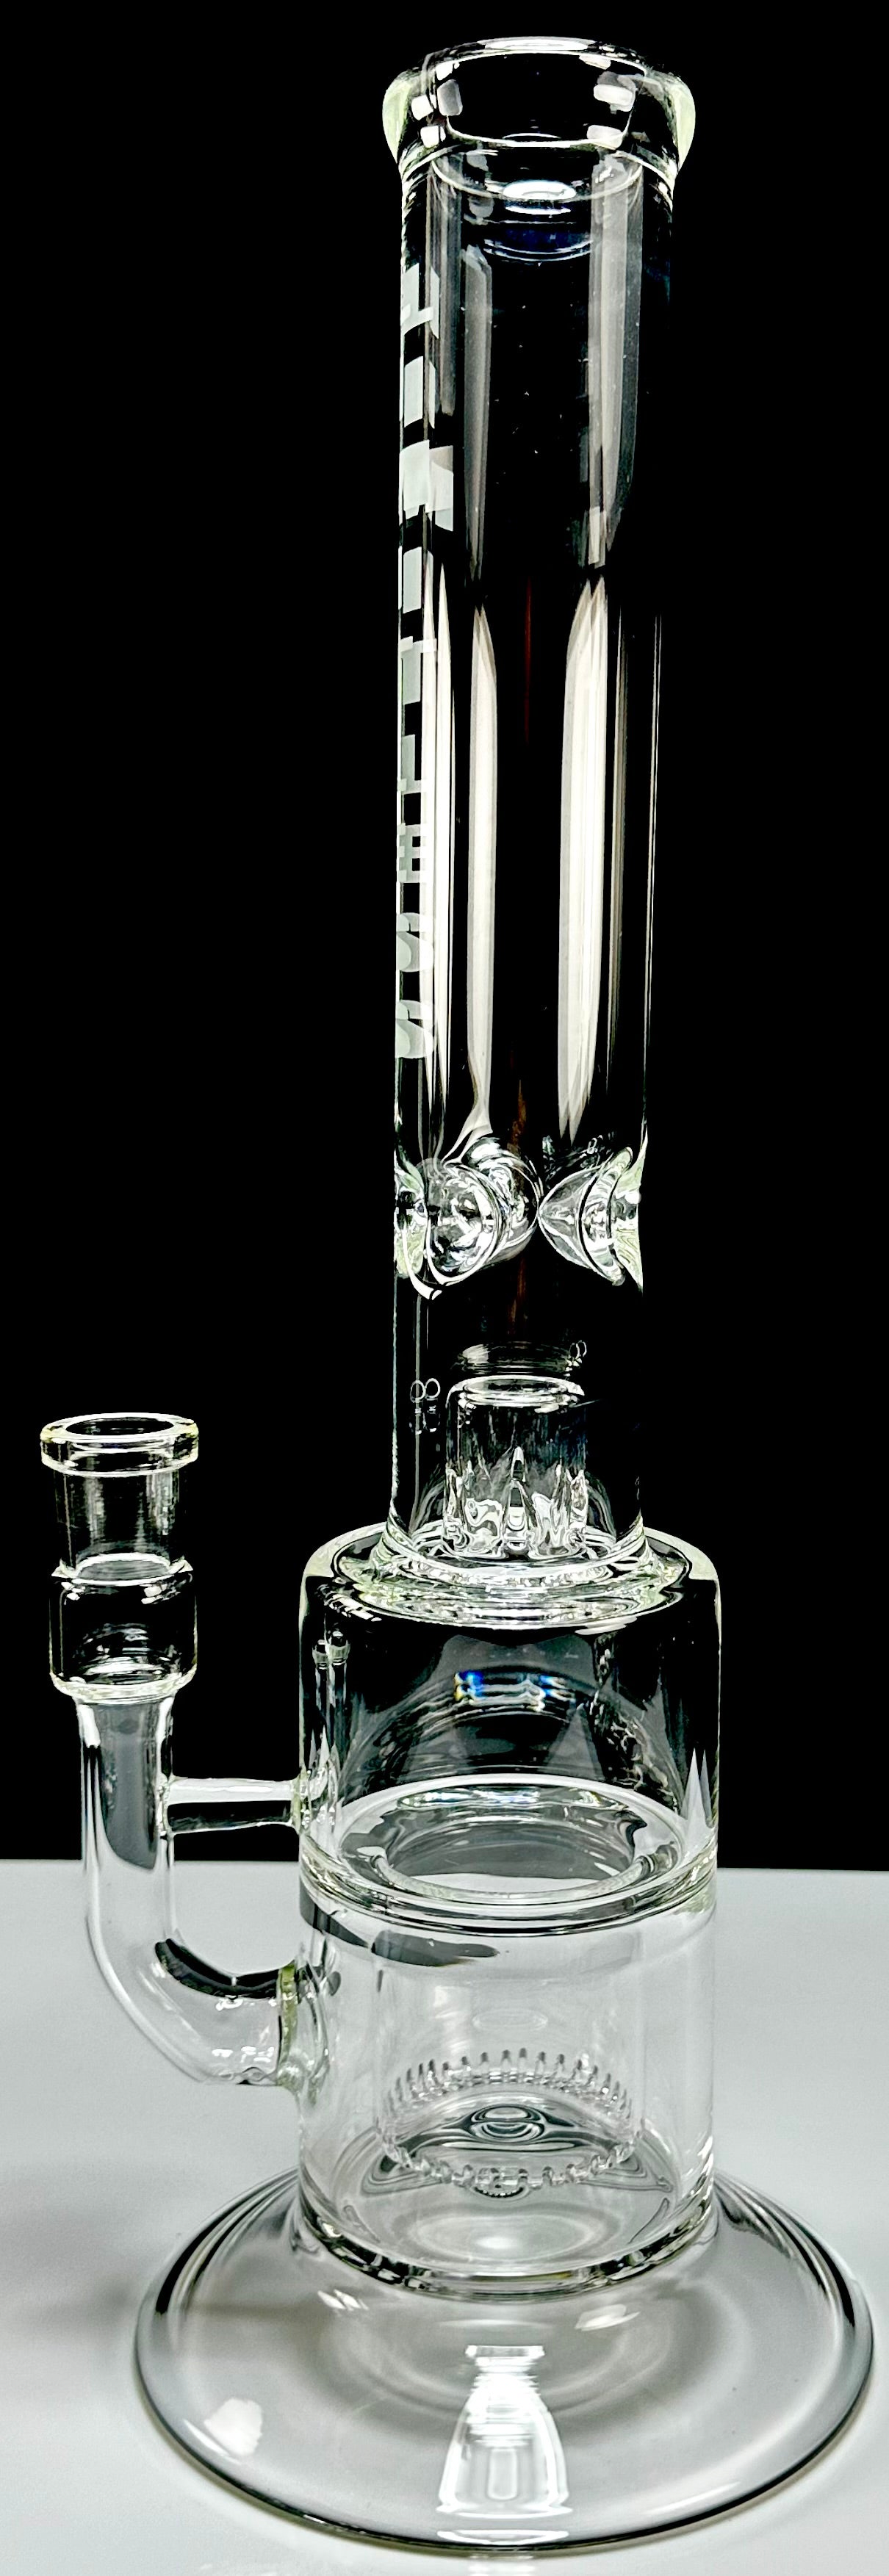 LIMITLESS GLASS 18mm SHOWERHEAD TUBE